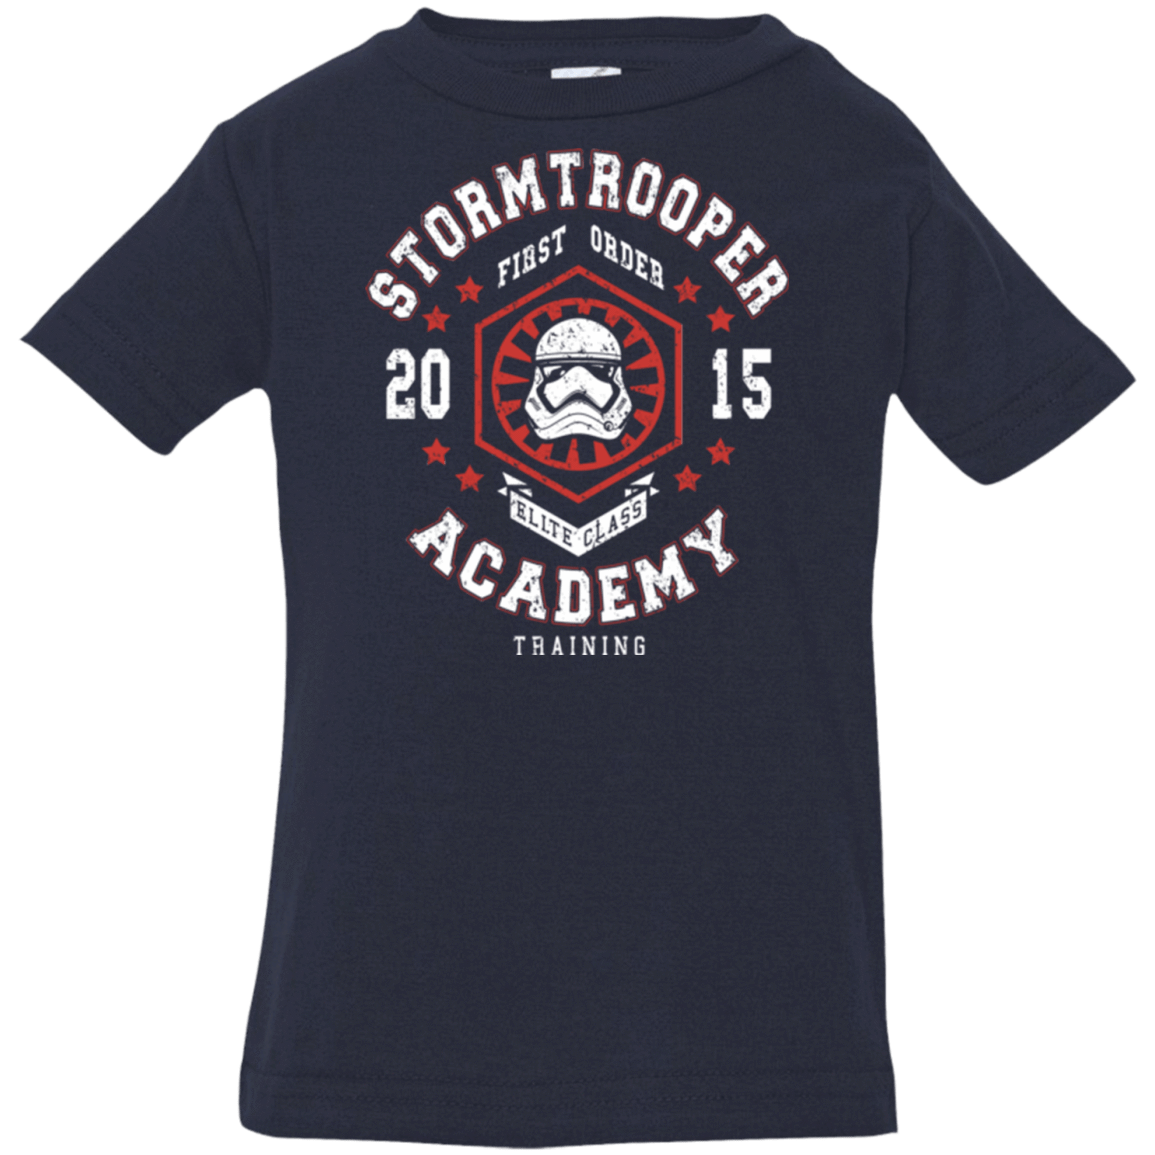 T-Shirts Navy / 6 Months Stormtrooper Academy 15 Infant Premium T-Shirt